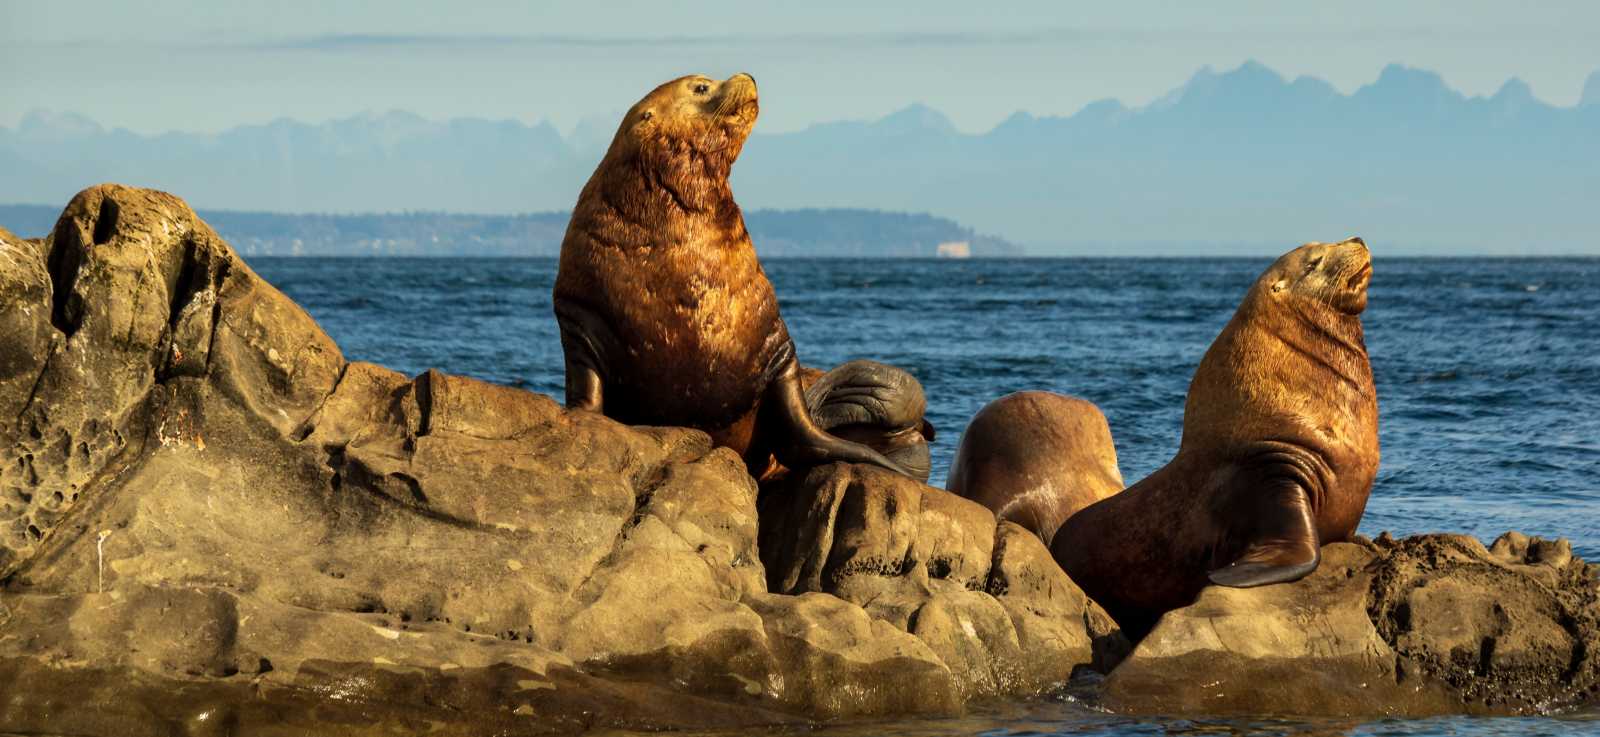 Steller Sea Lion | The Marine Mammal Center